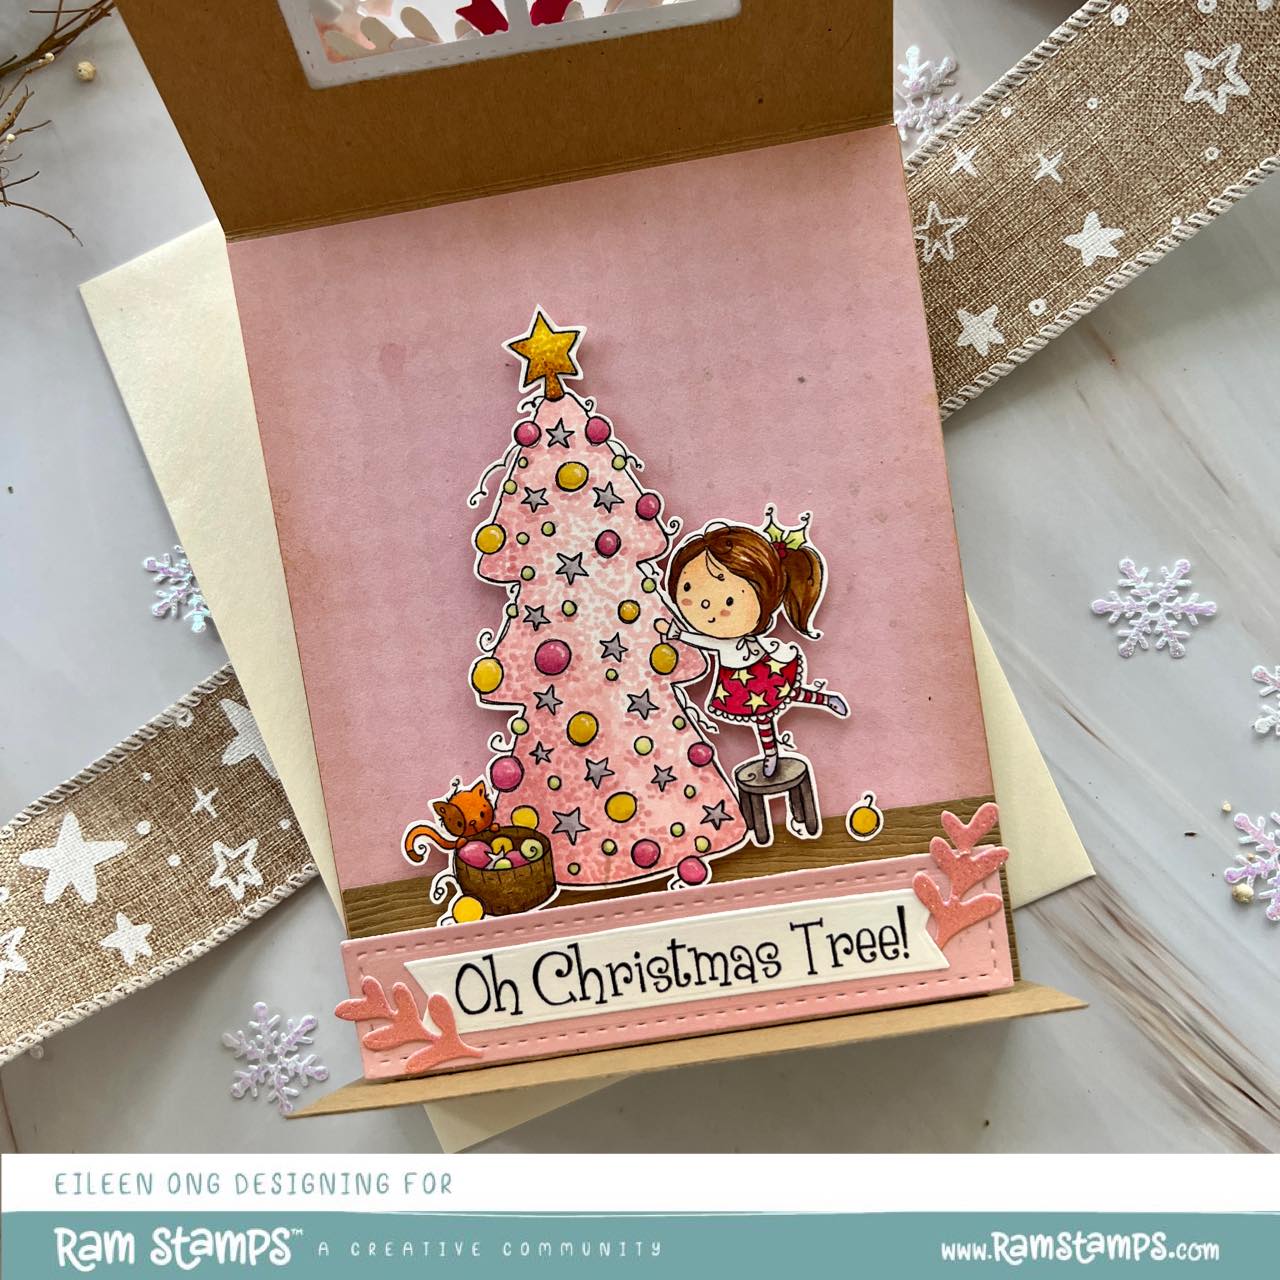 'Holly Jolly Christmas' Digital Stamp Set